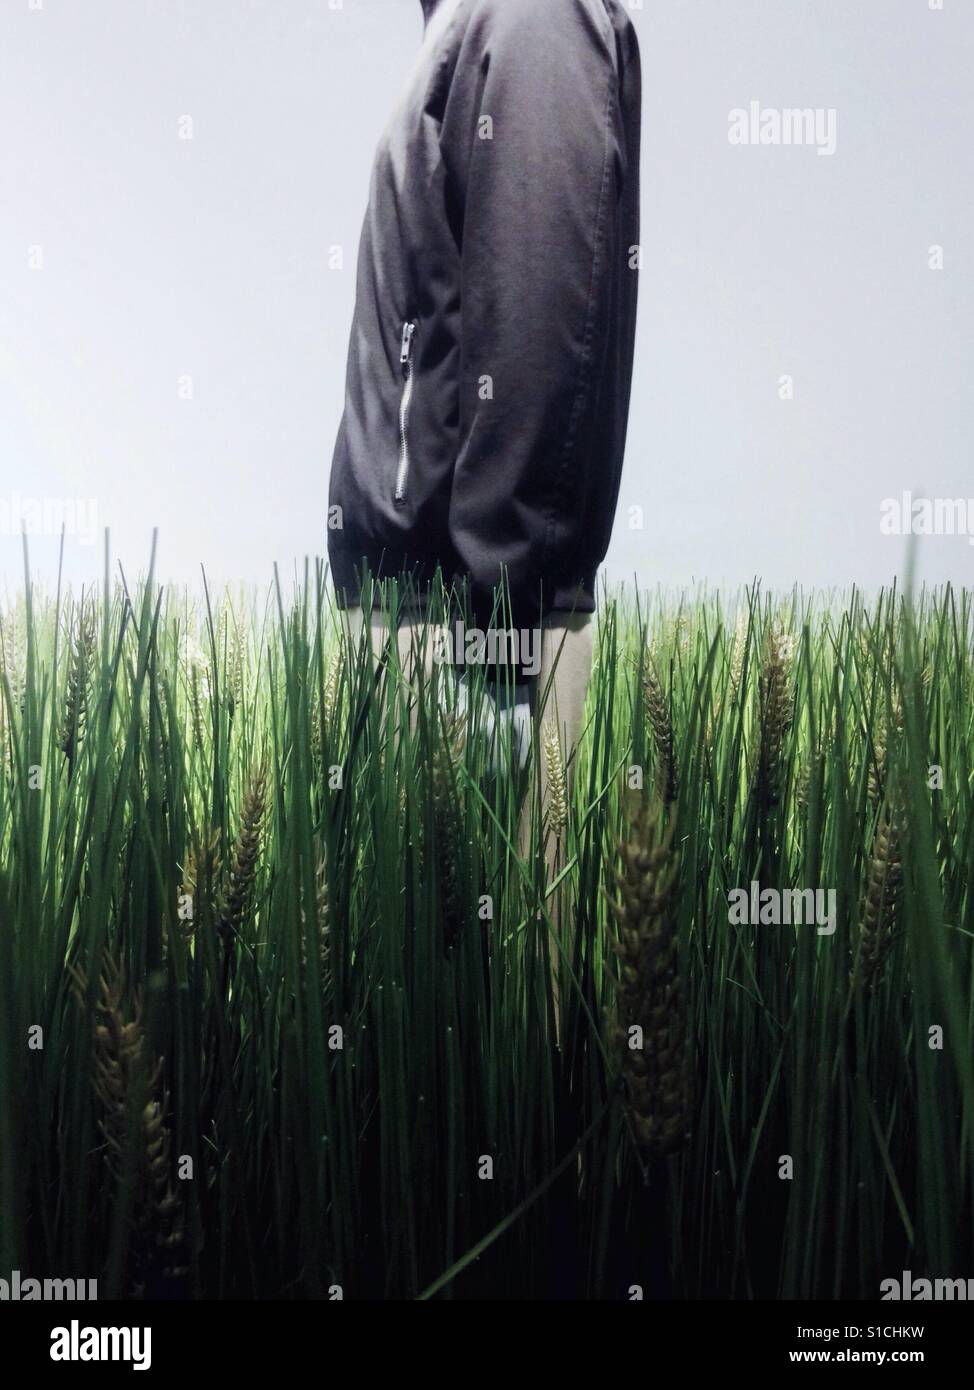 Man in a urban black jacket in a wheat field in a studio Stock Photo